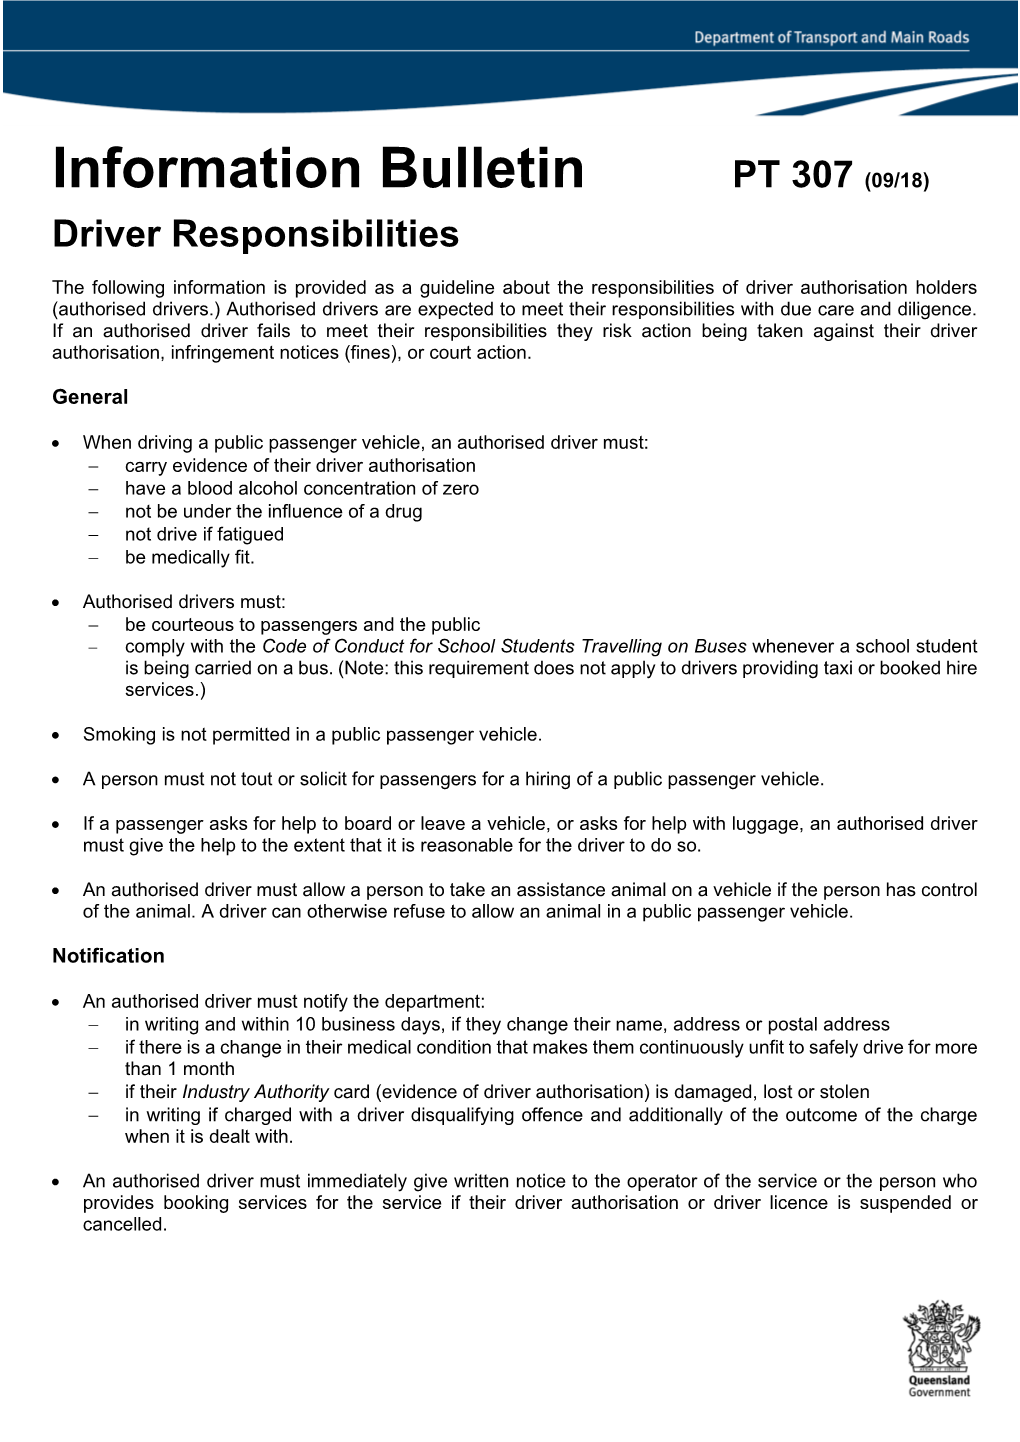 Information Bulletin PT 307 (09/18): Driver Responsibilities